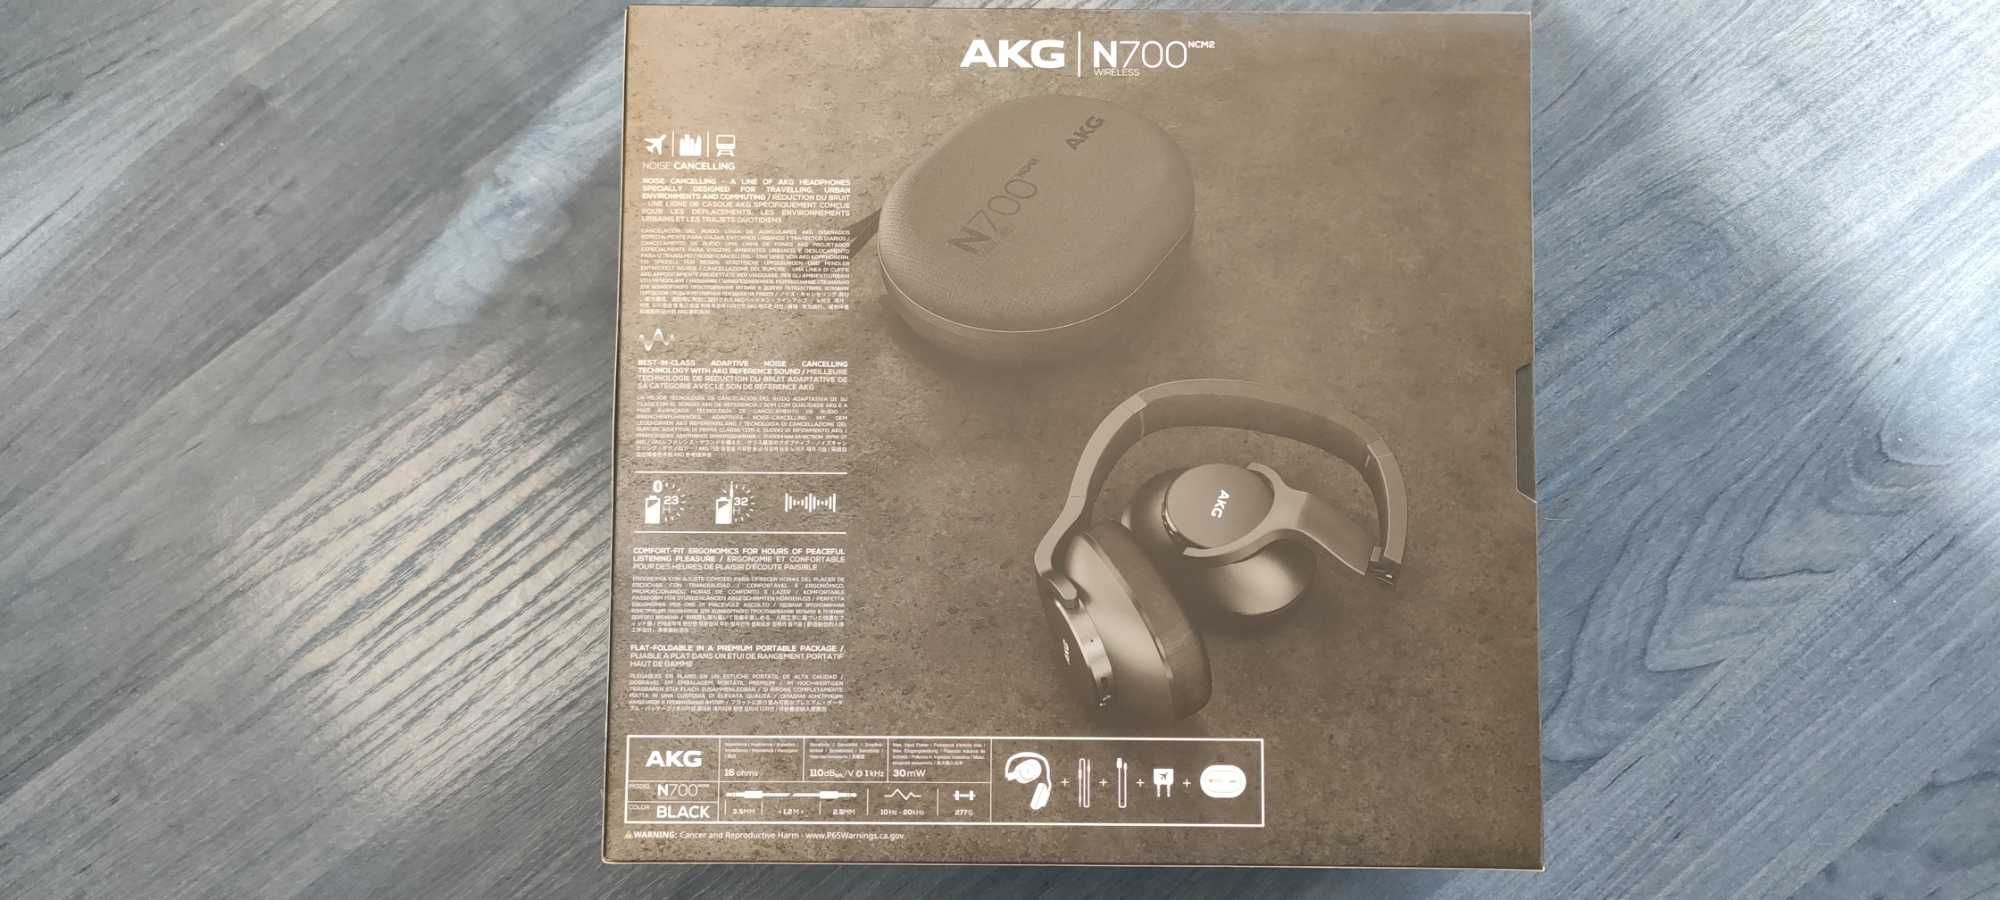 Samsung AKG N700 NCM2 Wireless, Adaptive Noise Cancelling Headphones